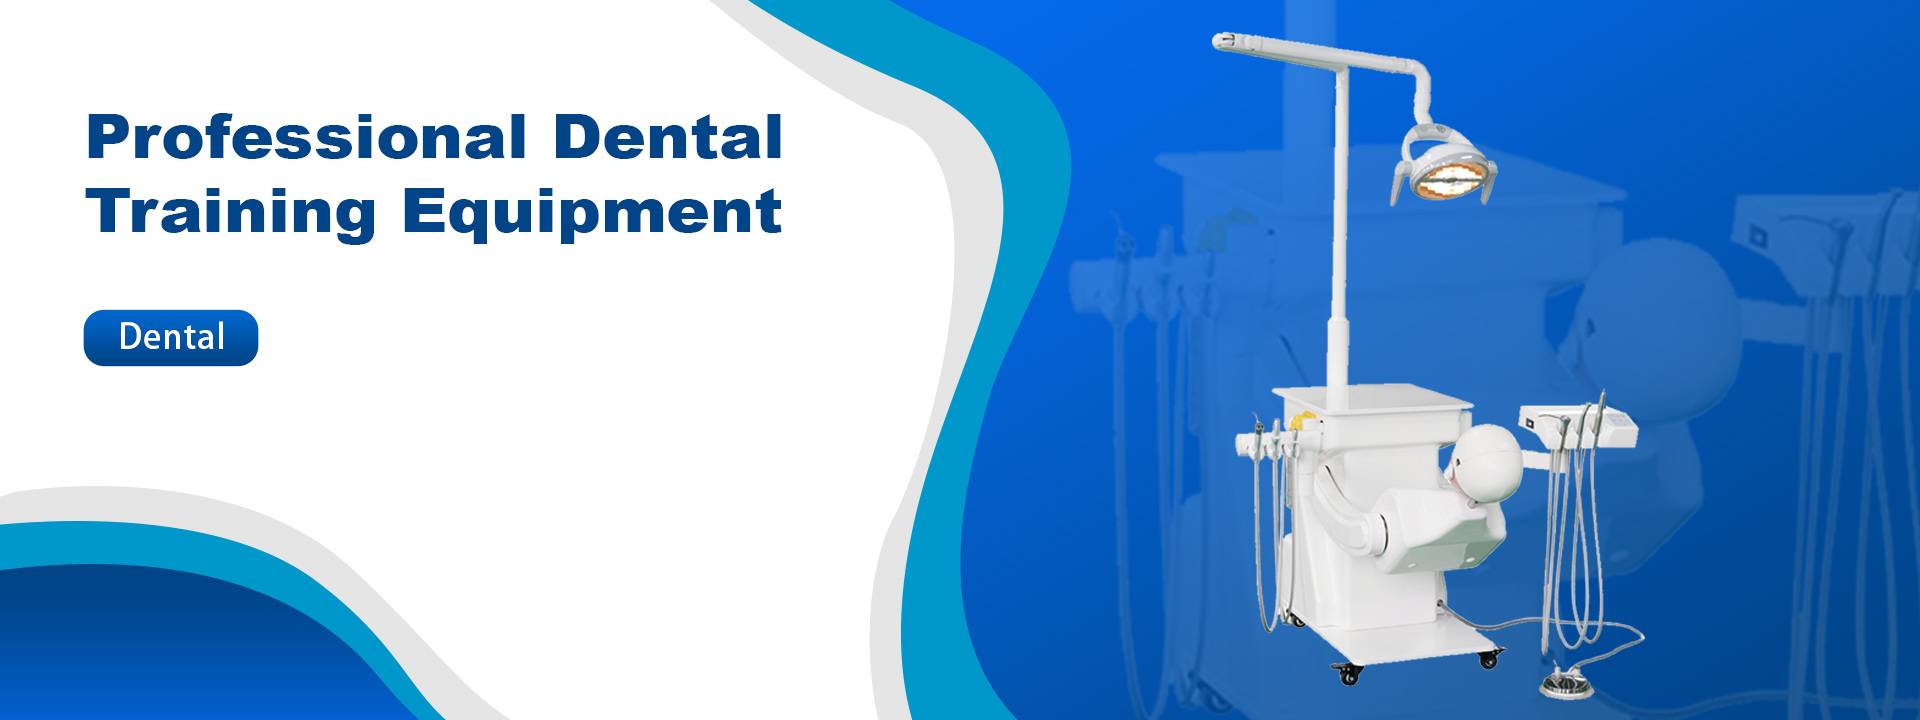 Professional-dental-training-equipment